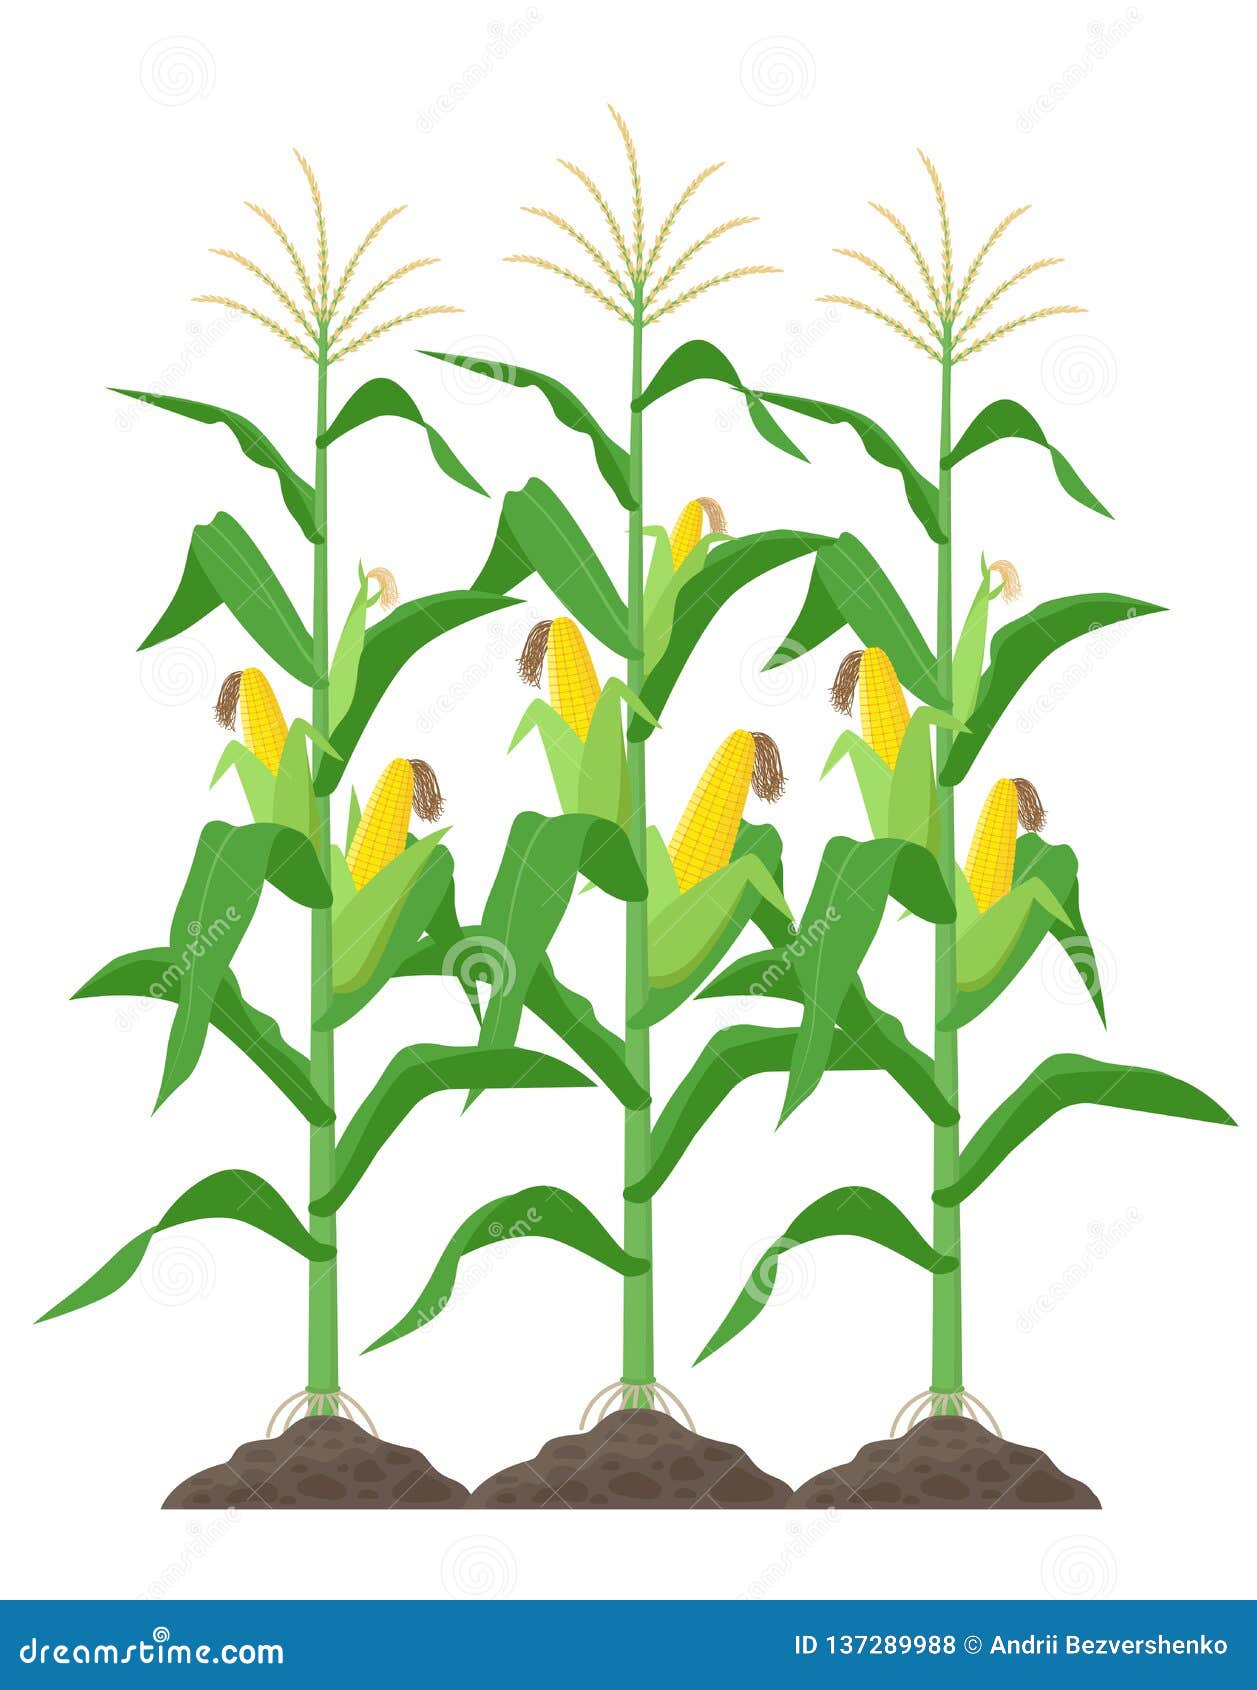 corn stalks  on white background. green corn plants on the field   in flat .